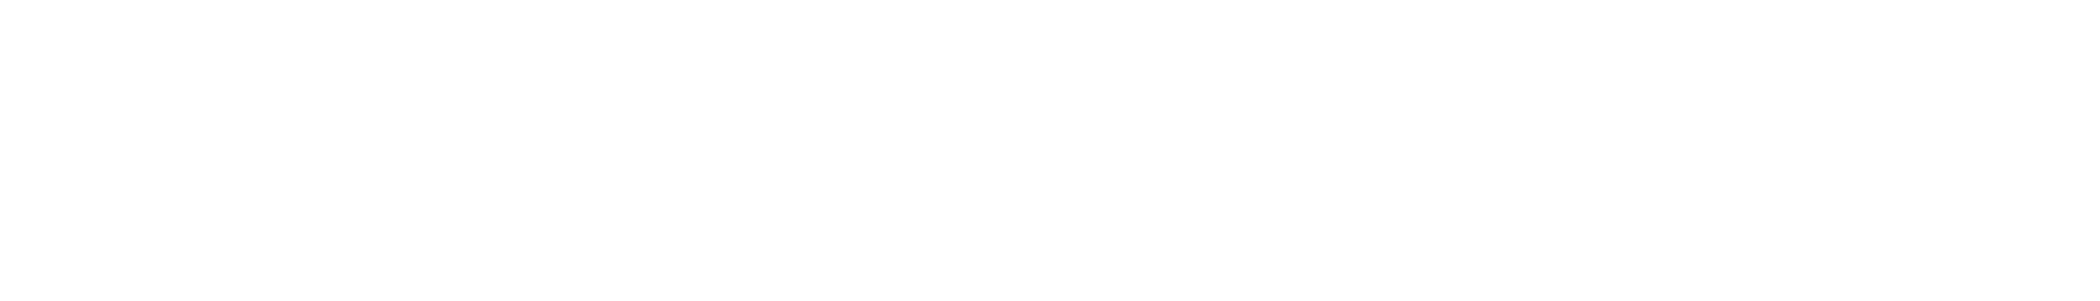 Navy Pier Steans Family Foundation Logo